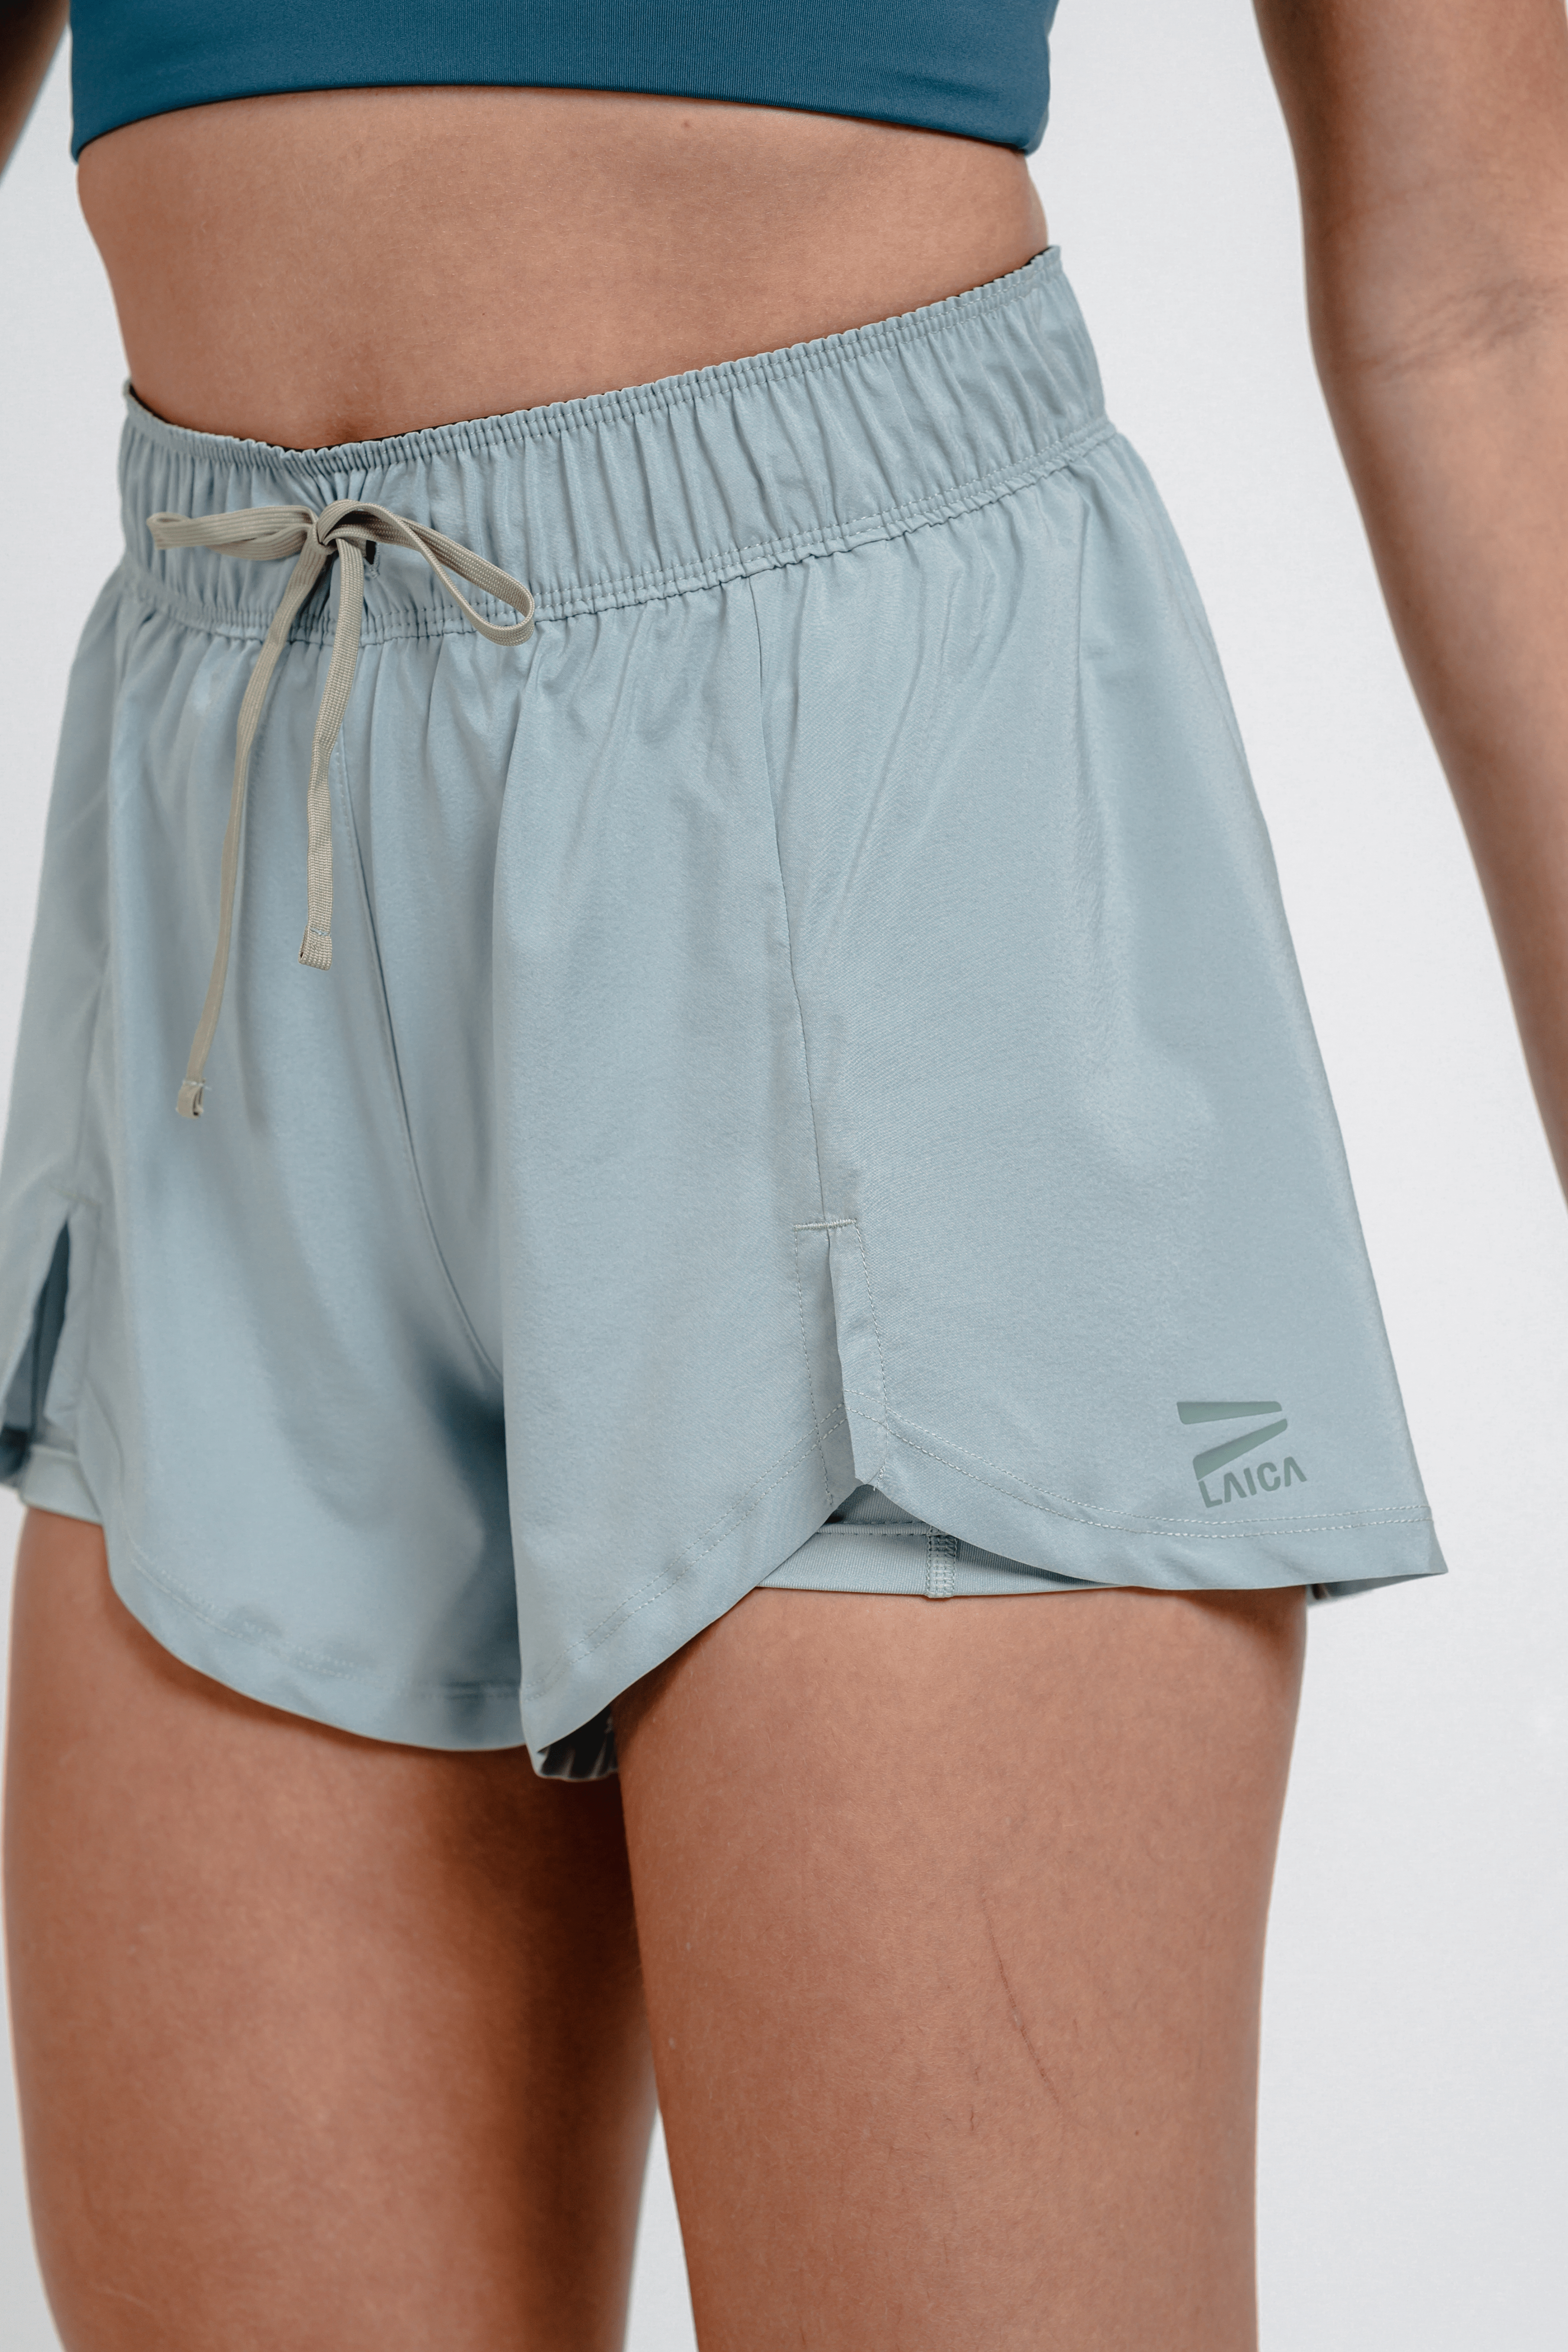 LAICA Impact Shorts - Silver Blue